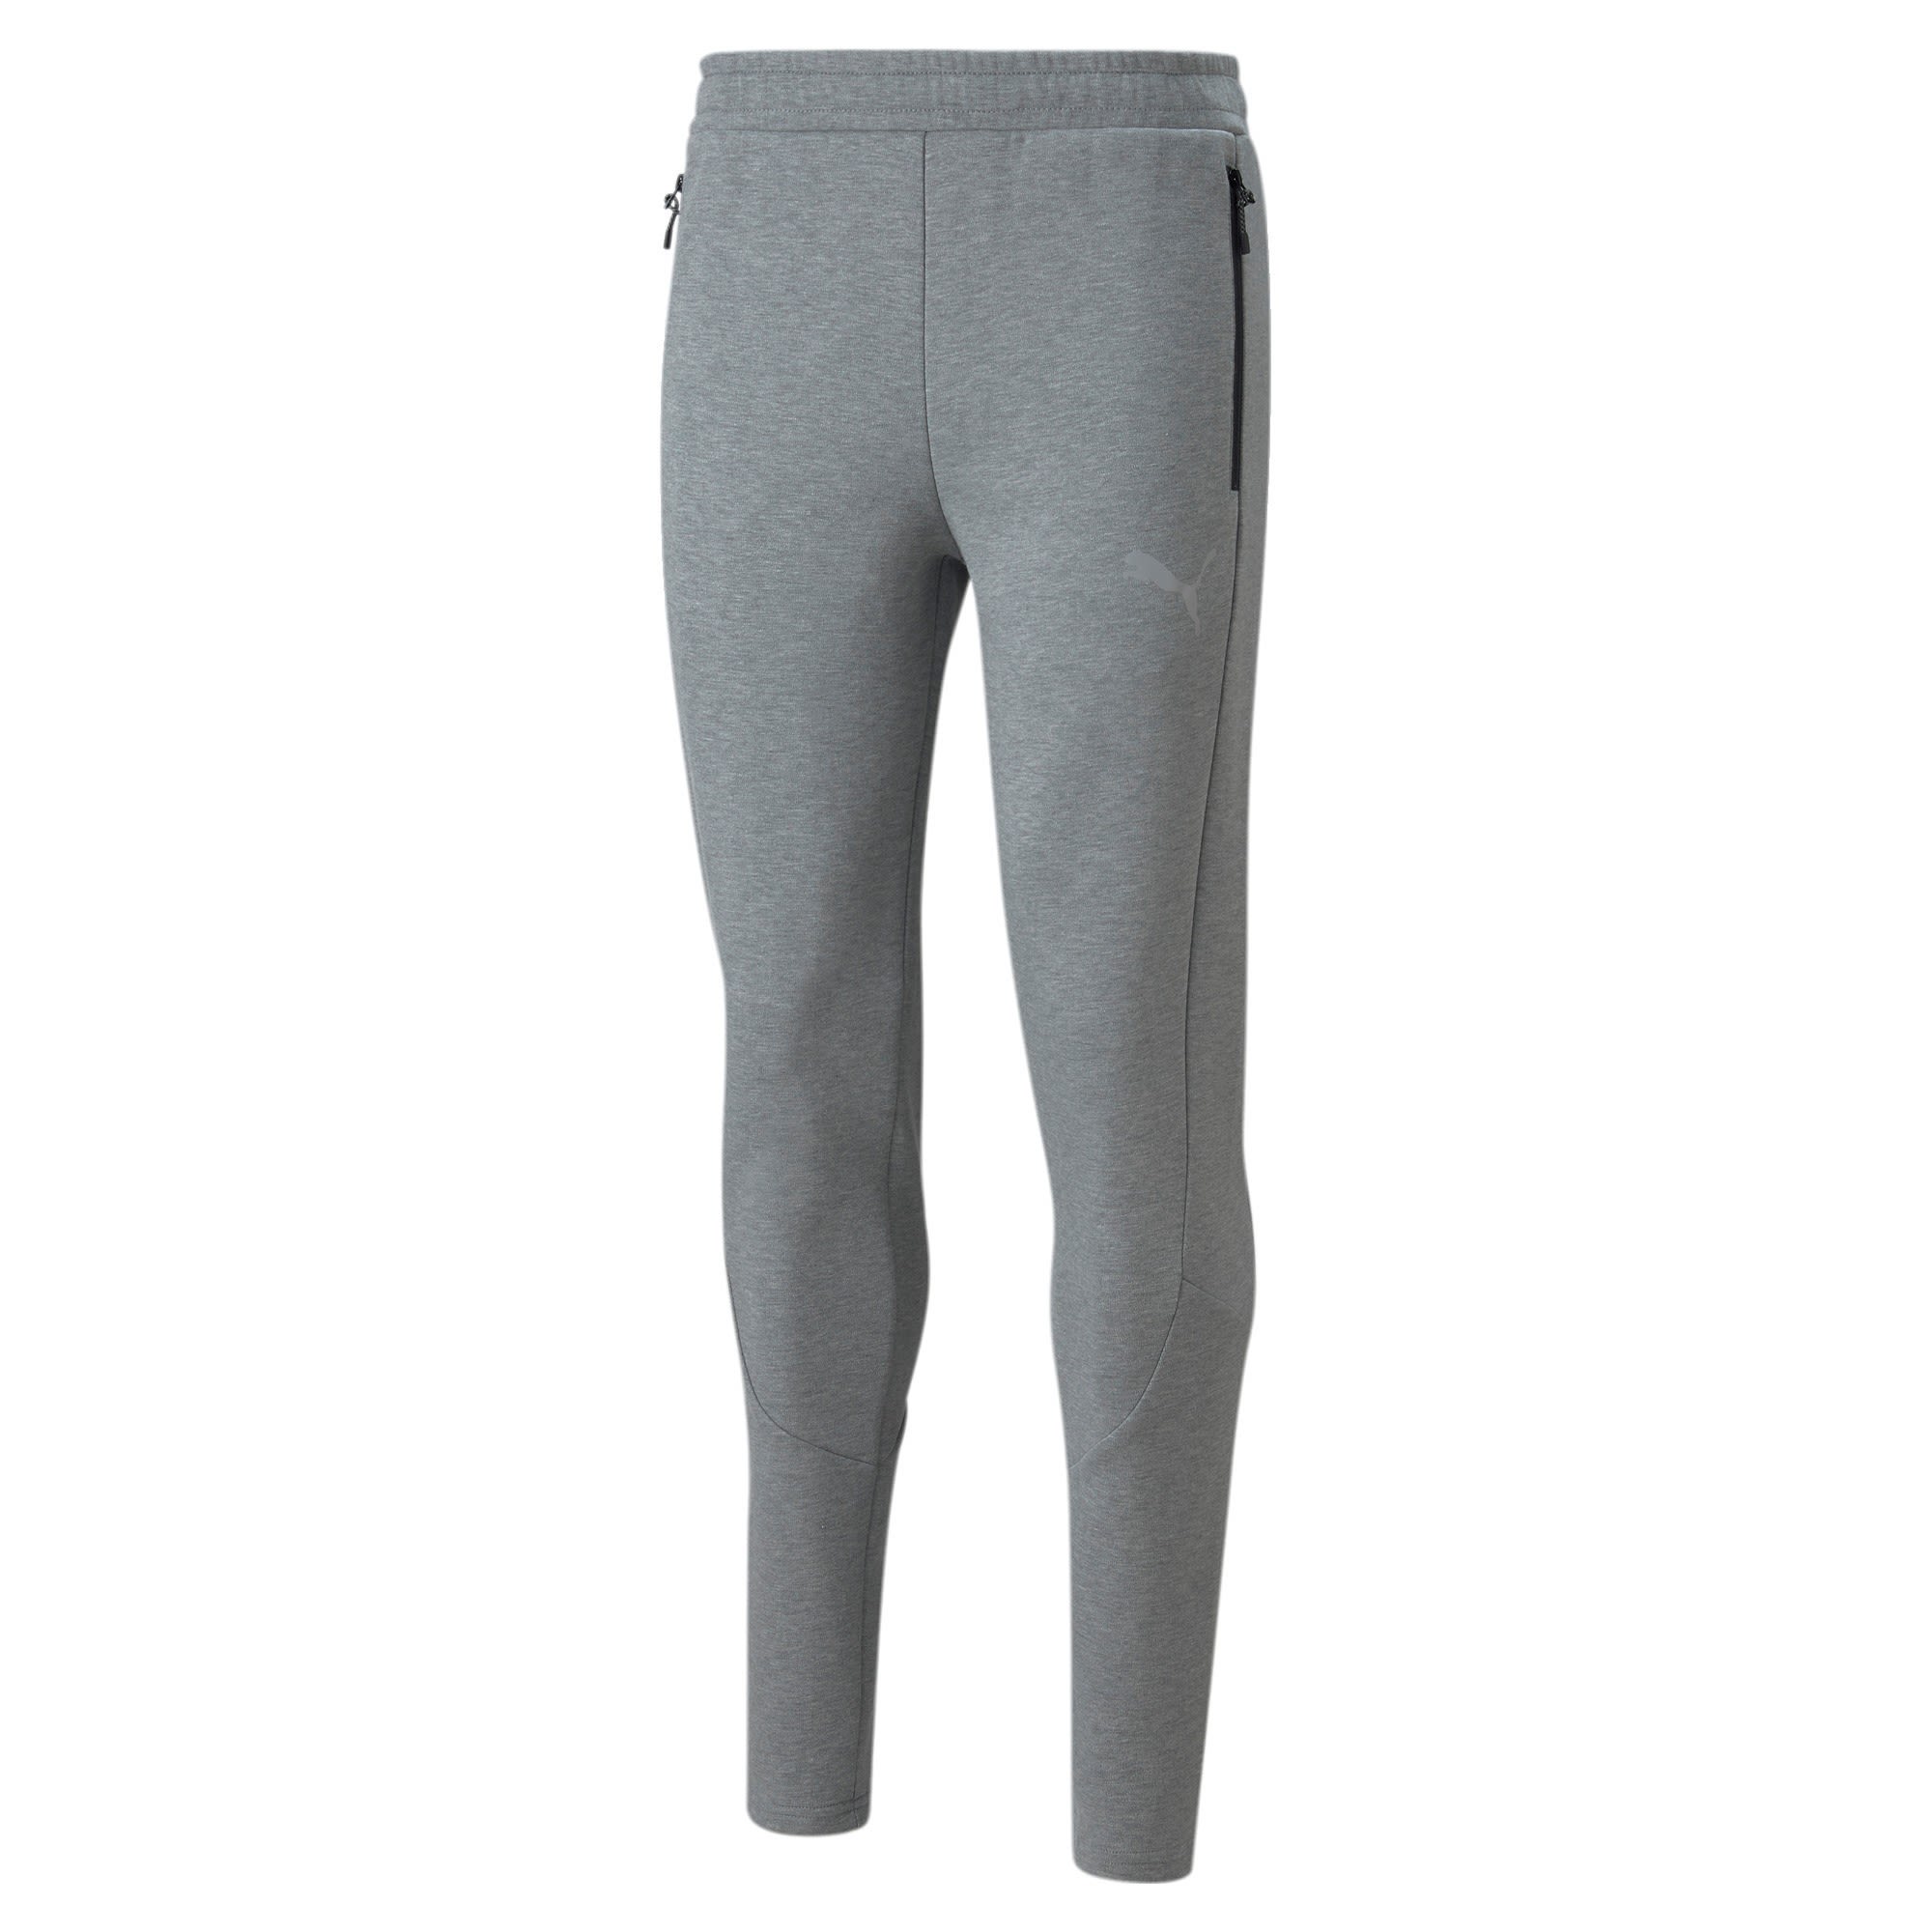 Puma Evostripe Pants Grau- Male Softshellhosen- Grsse S - Farbe Medium Gray Heather